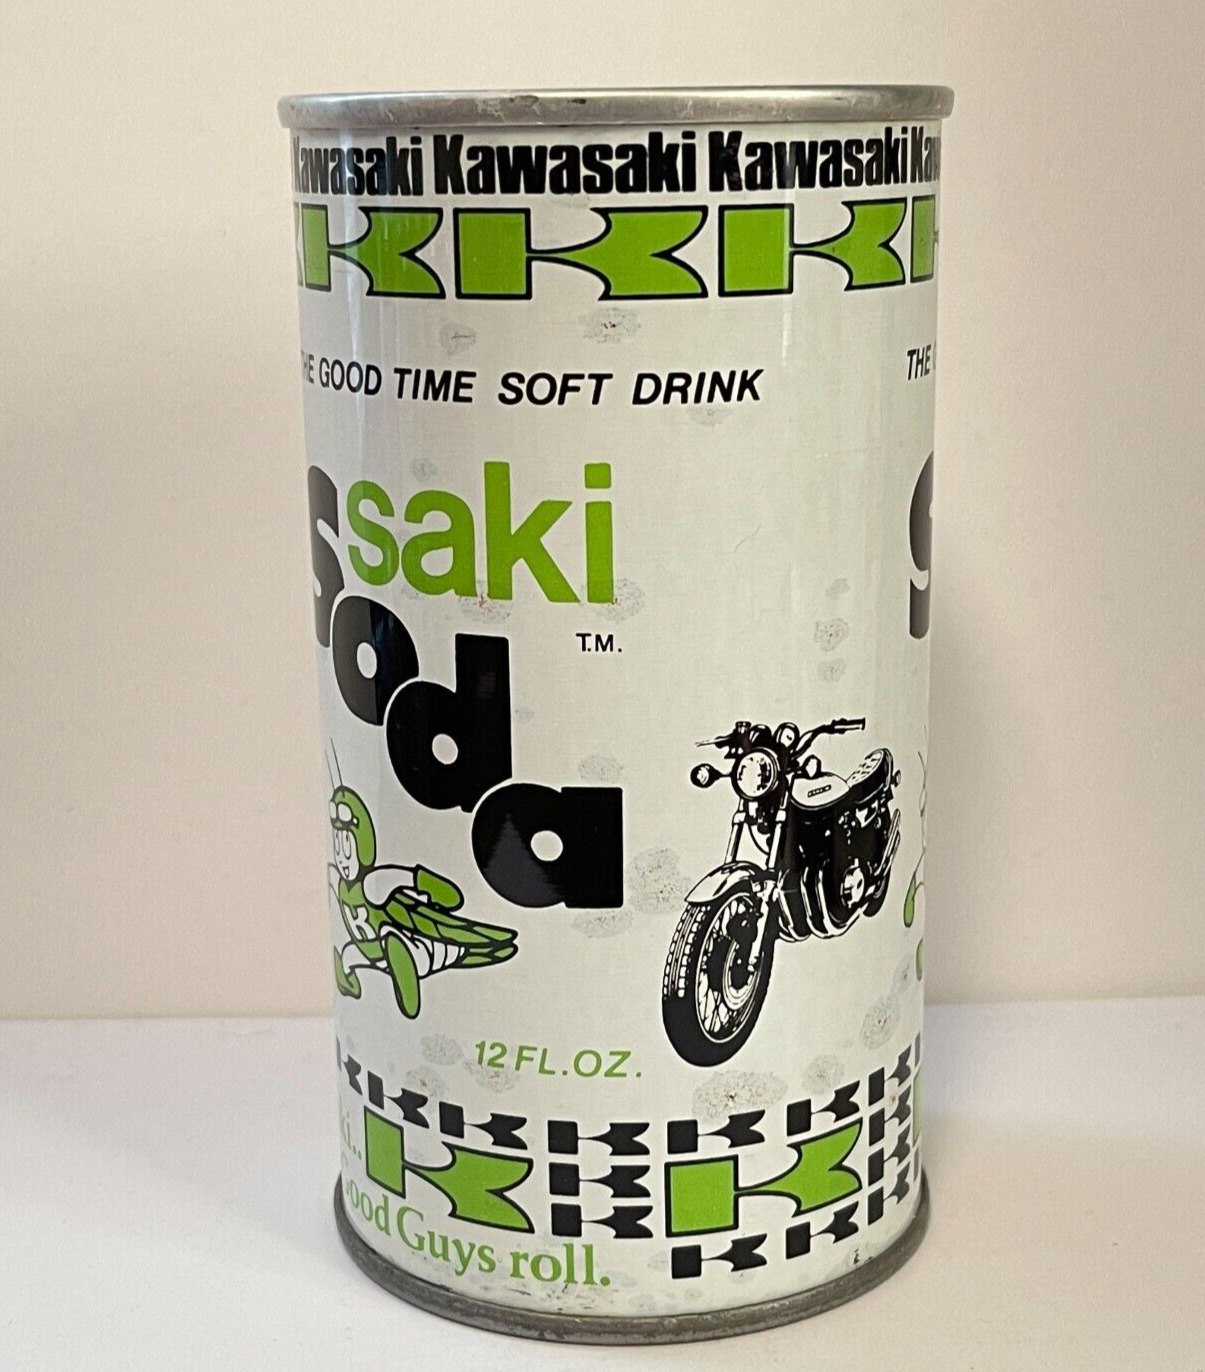 KAWASAKI SAKI SODA Pop can soft drink STEEL CAN from 1960s / 1970s PULL TAB RARE